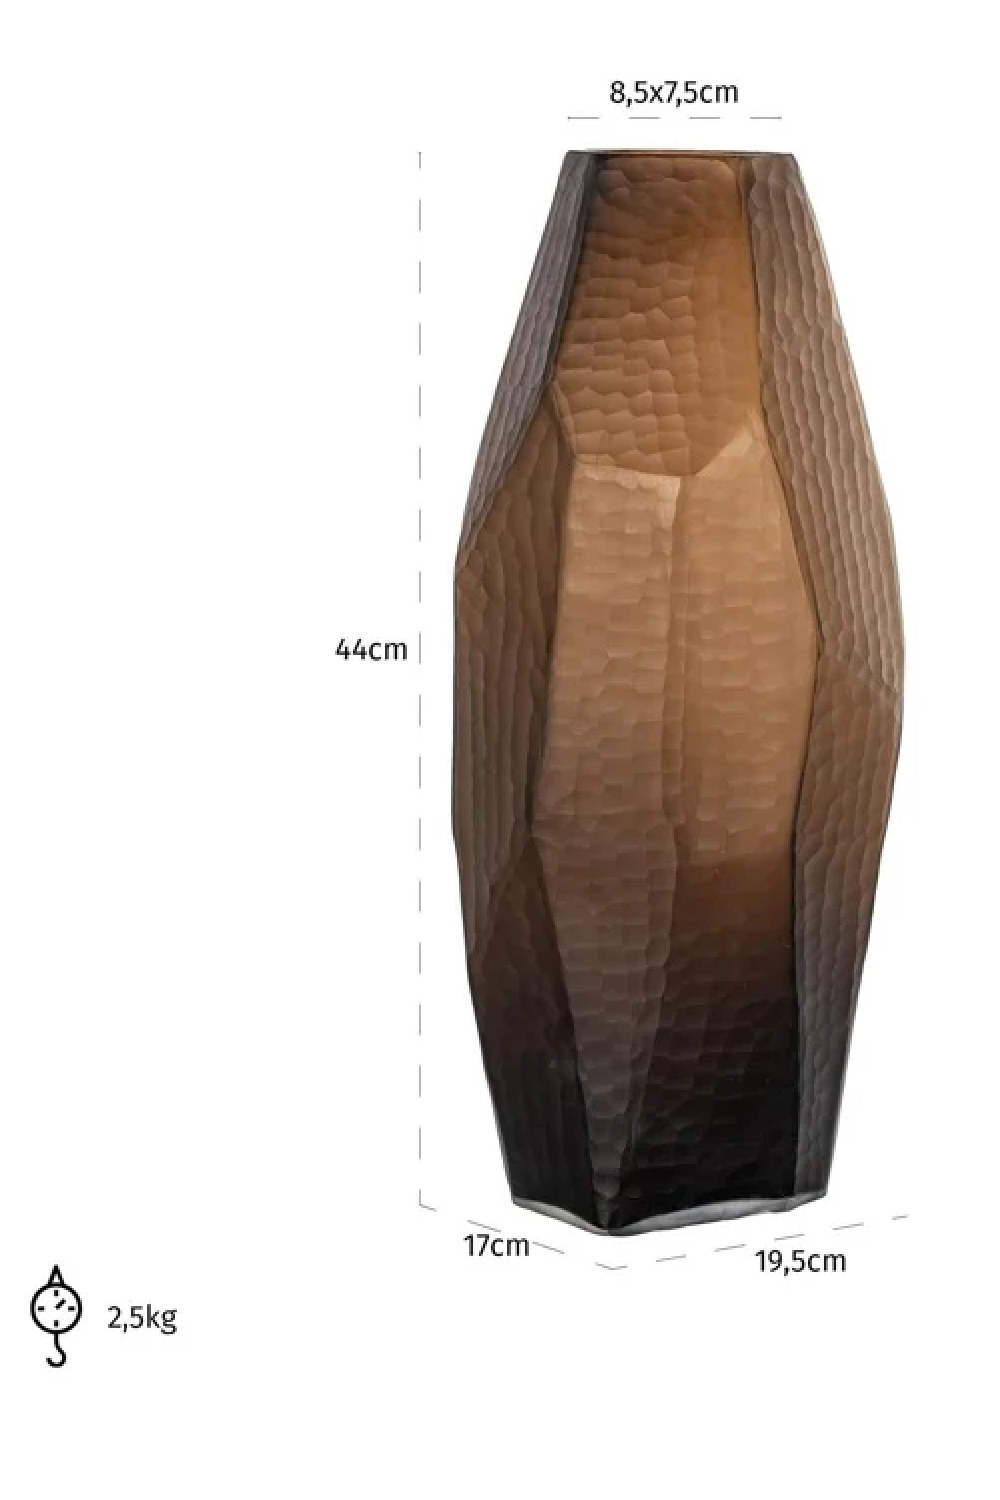 Amber Glass Faceted Vase | OROA Sadie | Oroa.com